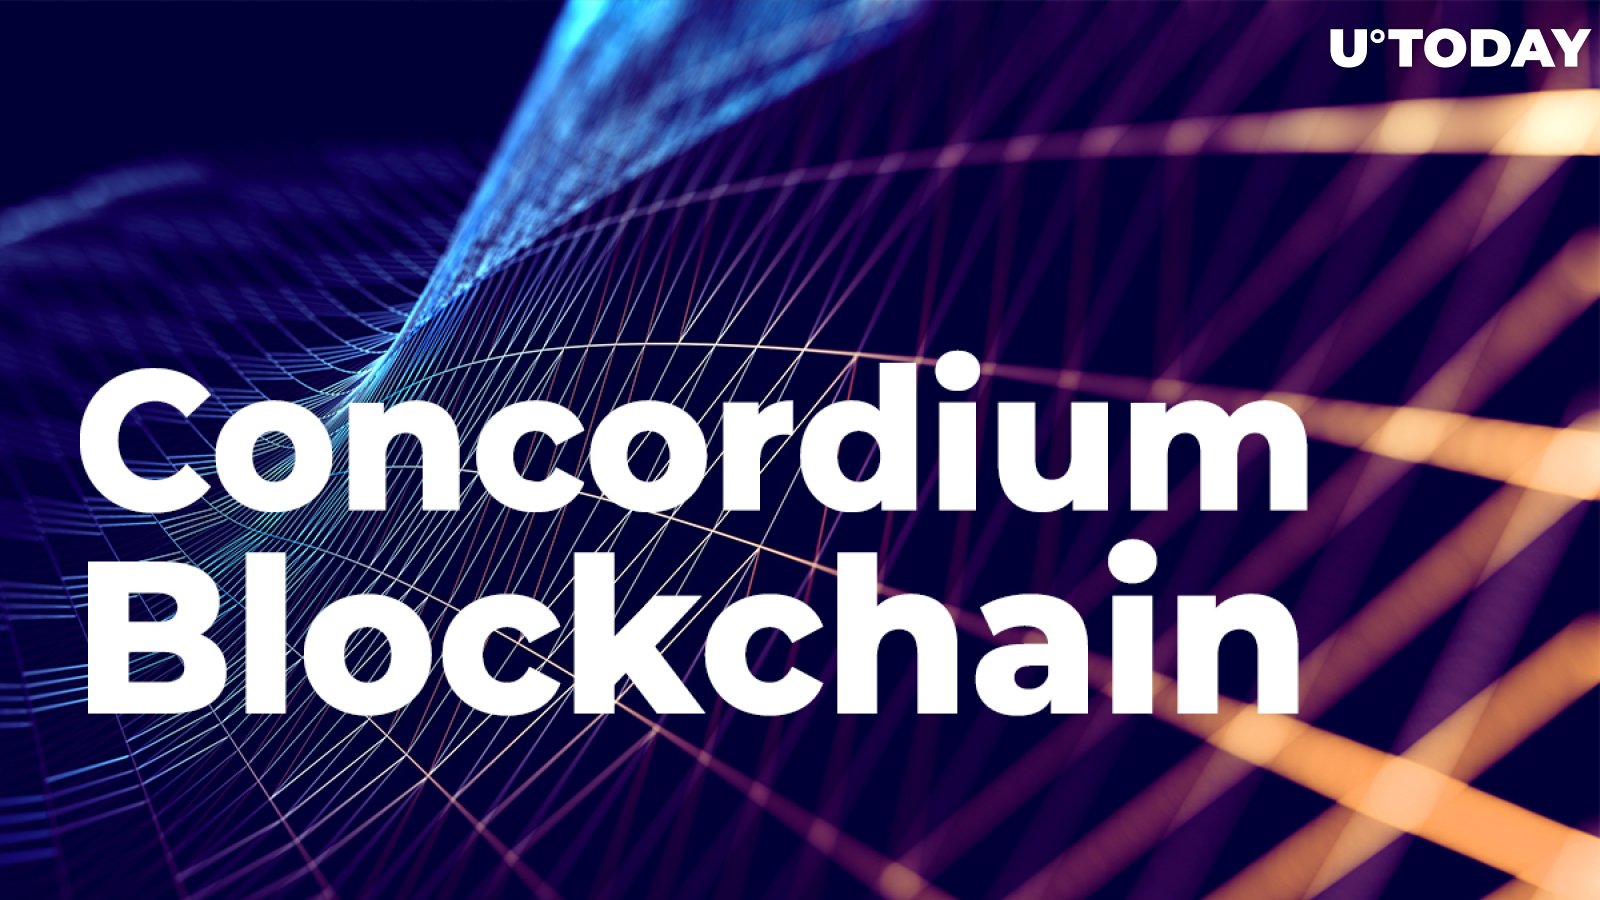 Concordium Blockchain Finishes Testnet with 1,000 Nodes, Raises €10 Million for New Milestones